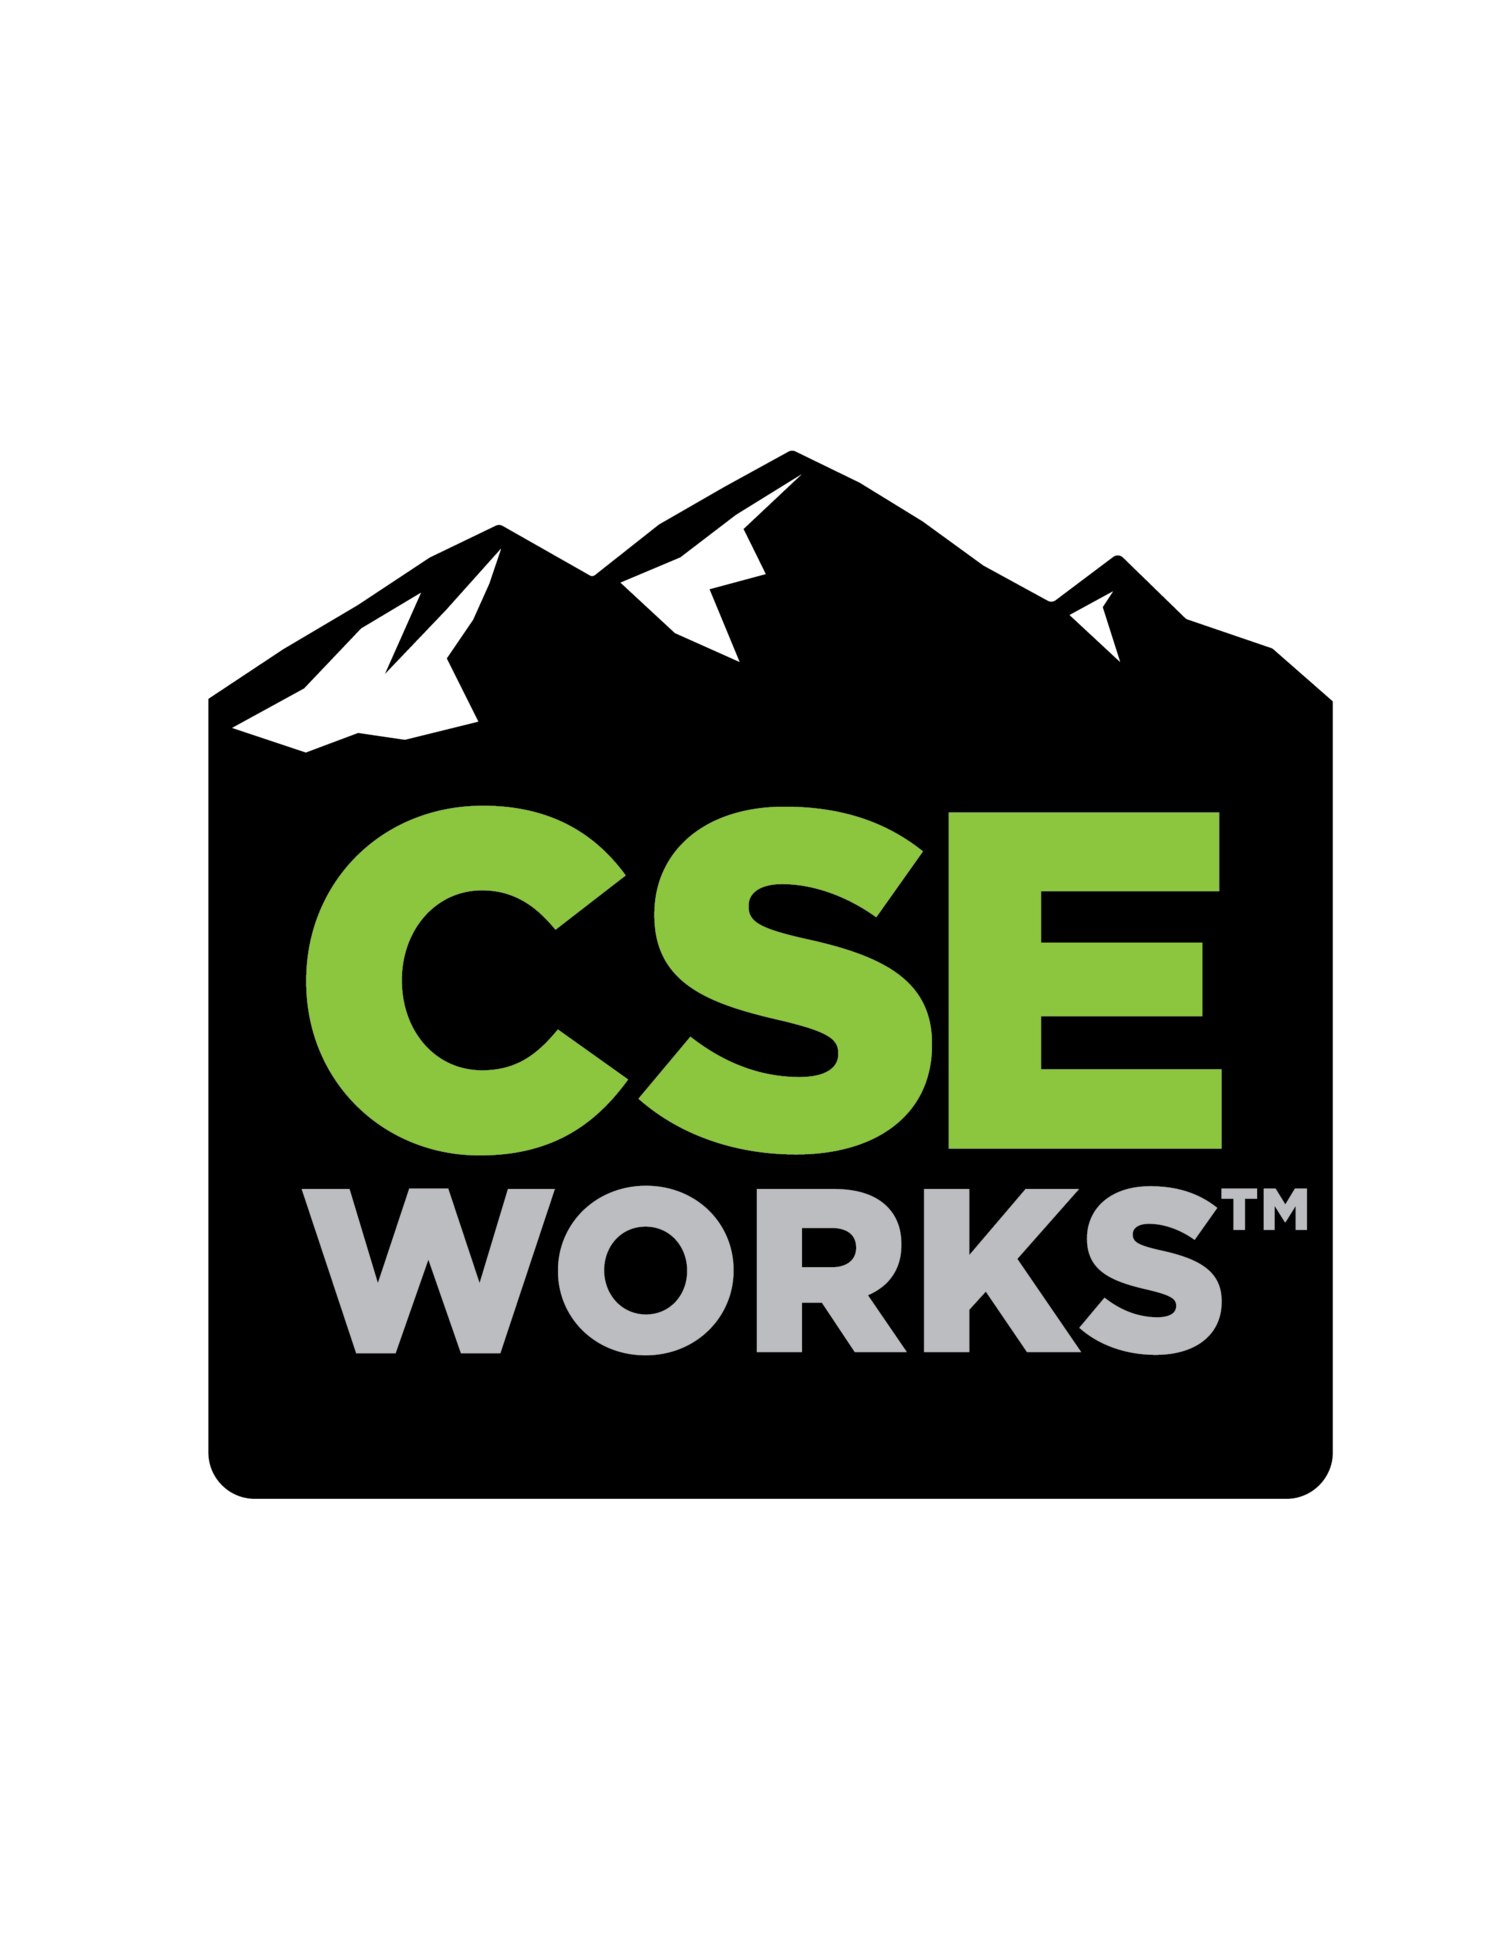 CSE WORKS™